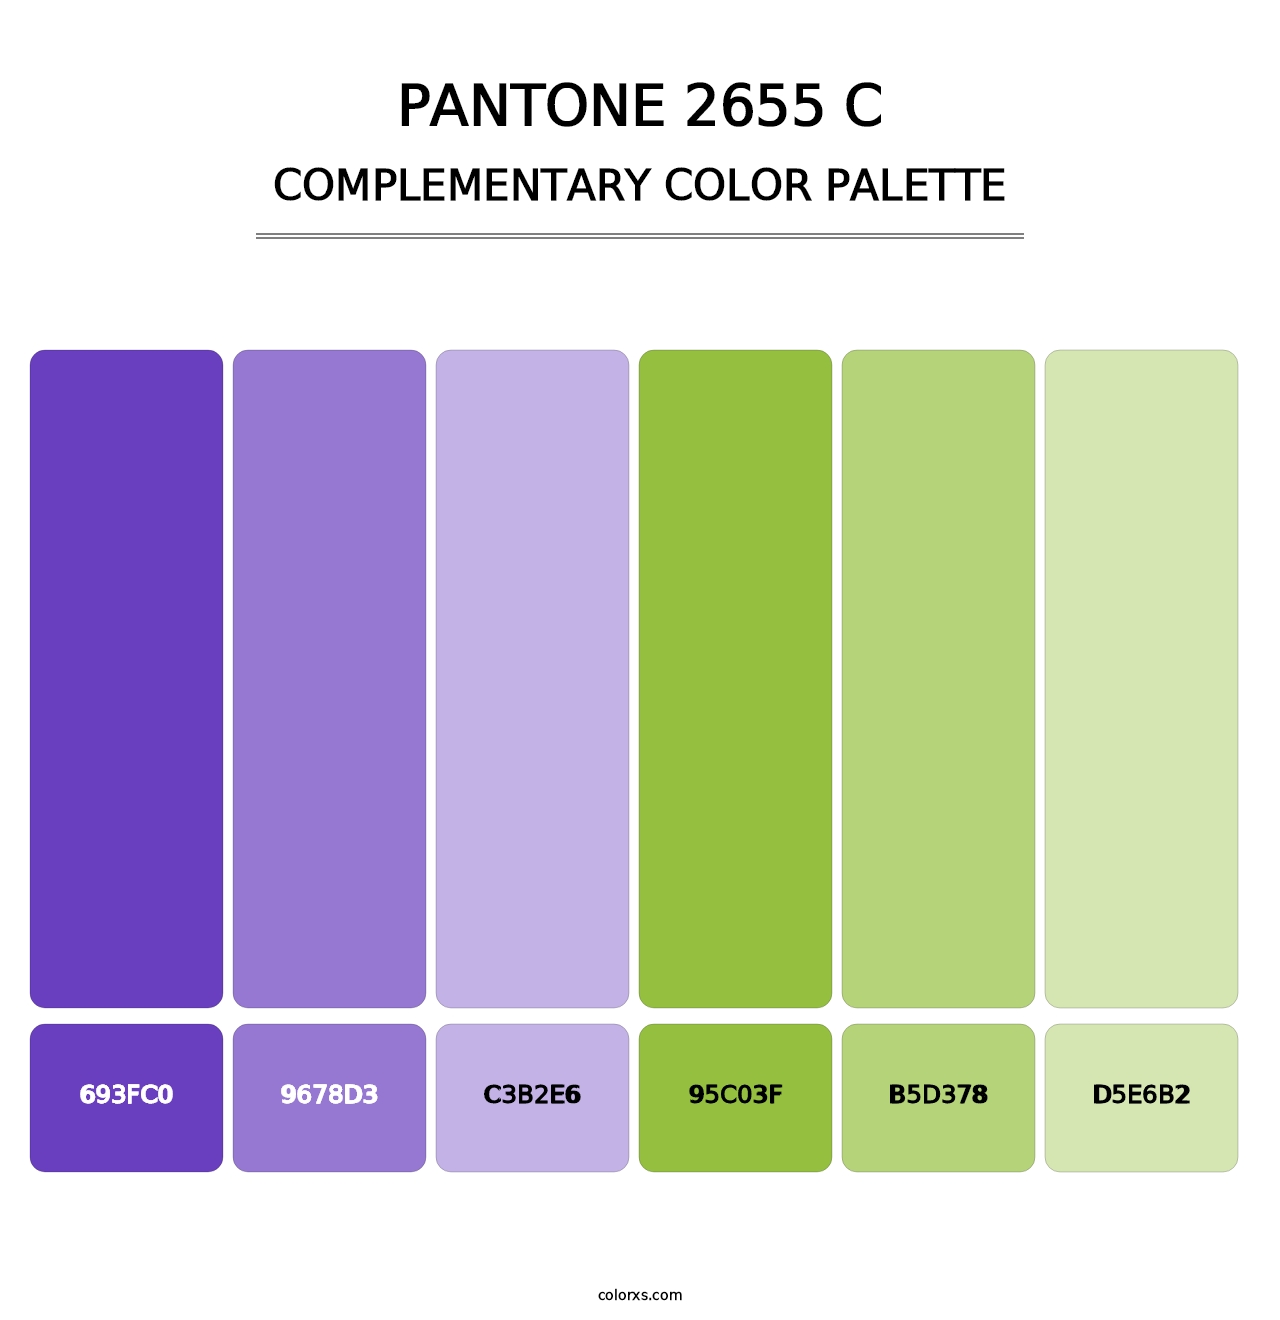 PANTONE 2655 C - Complementary Color Palette